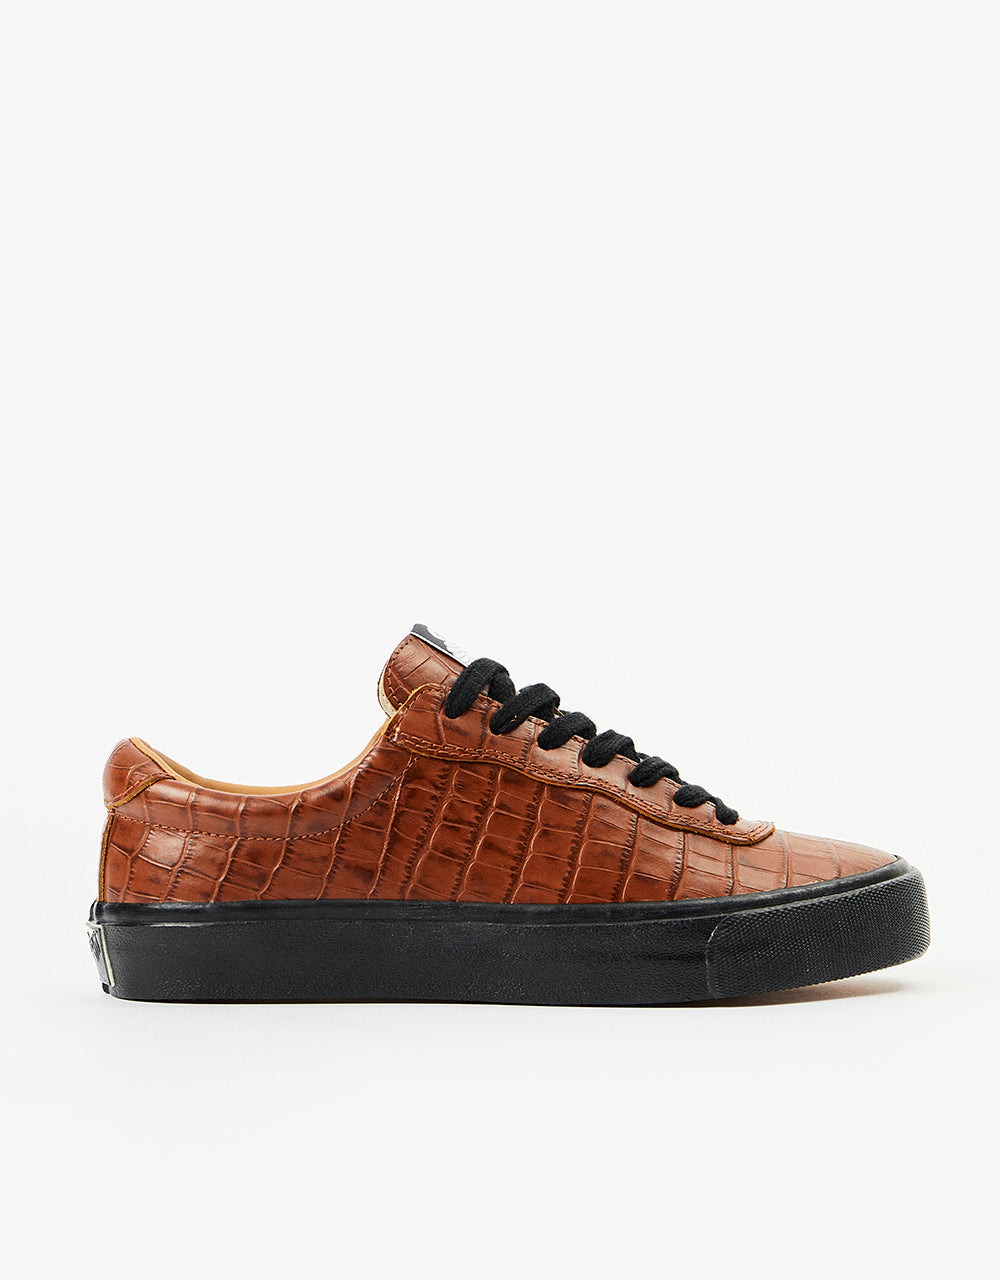 Last Resort AB VM001 Croc Skate Shoes - Brown/Black